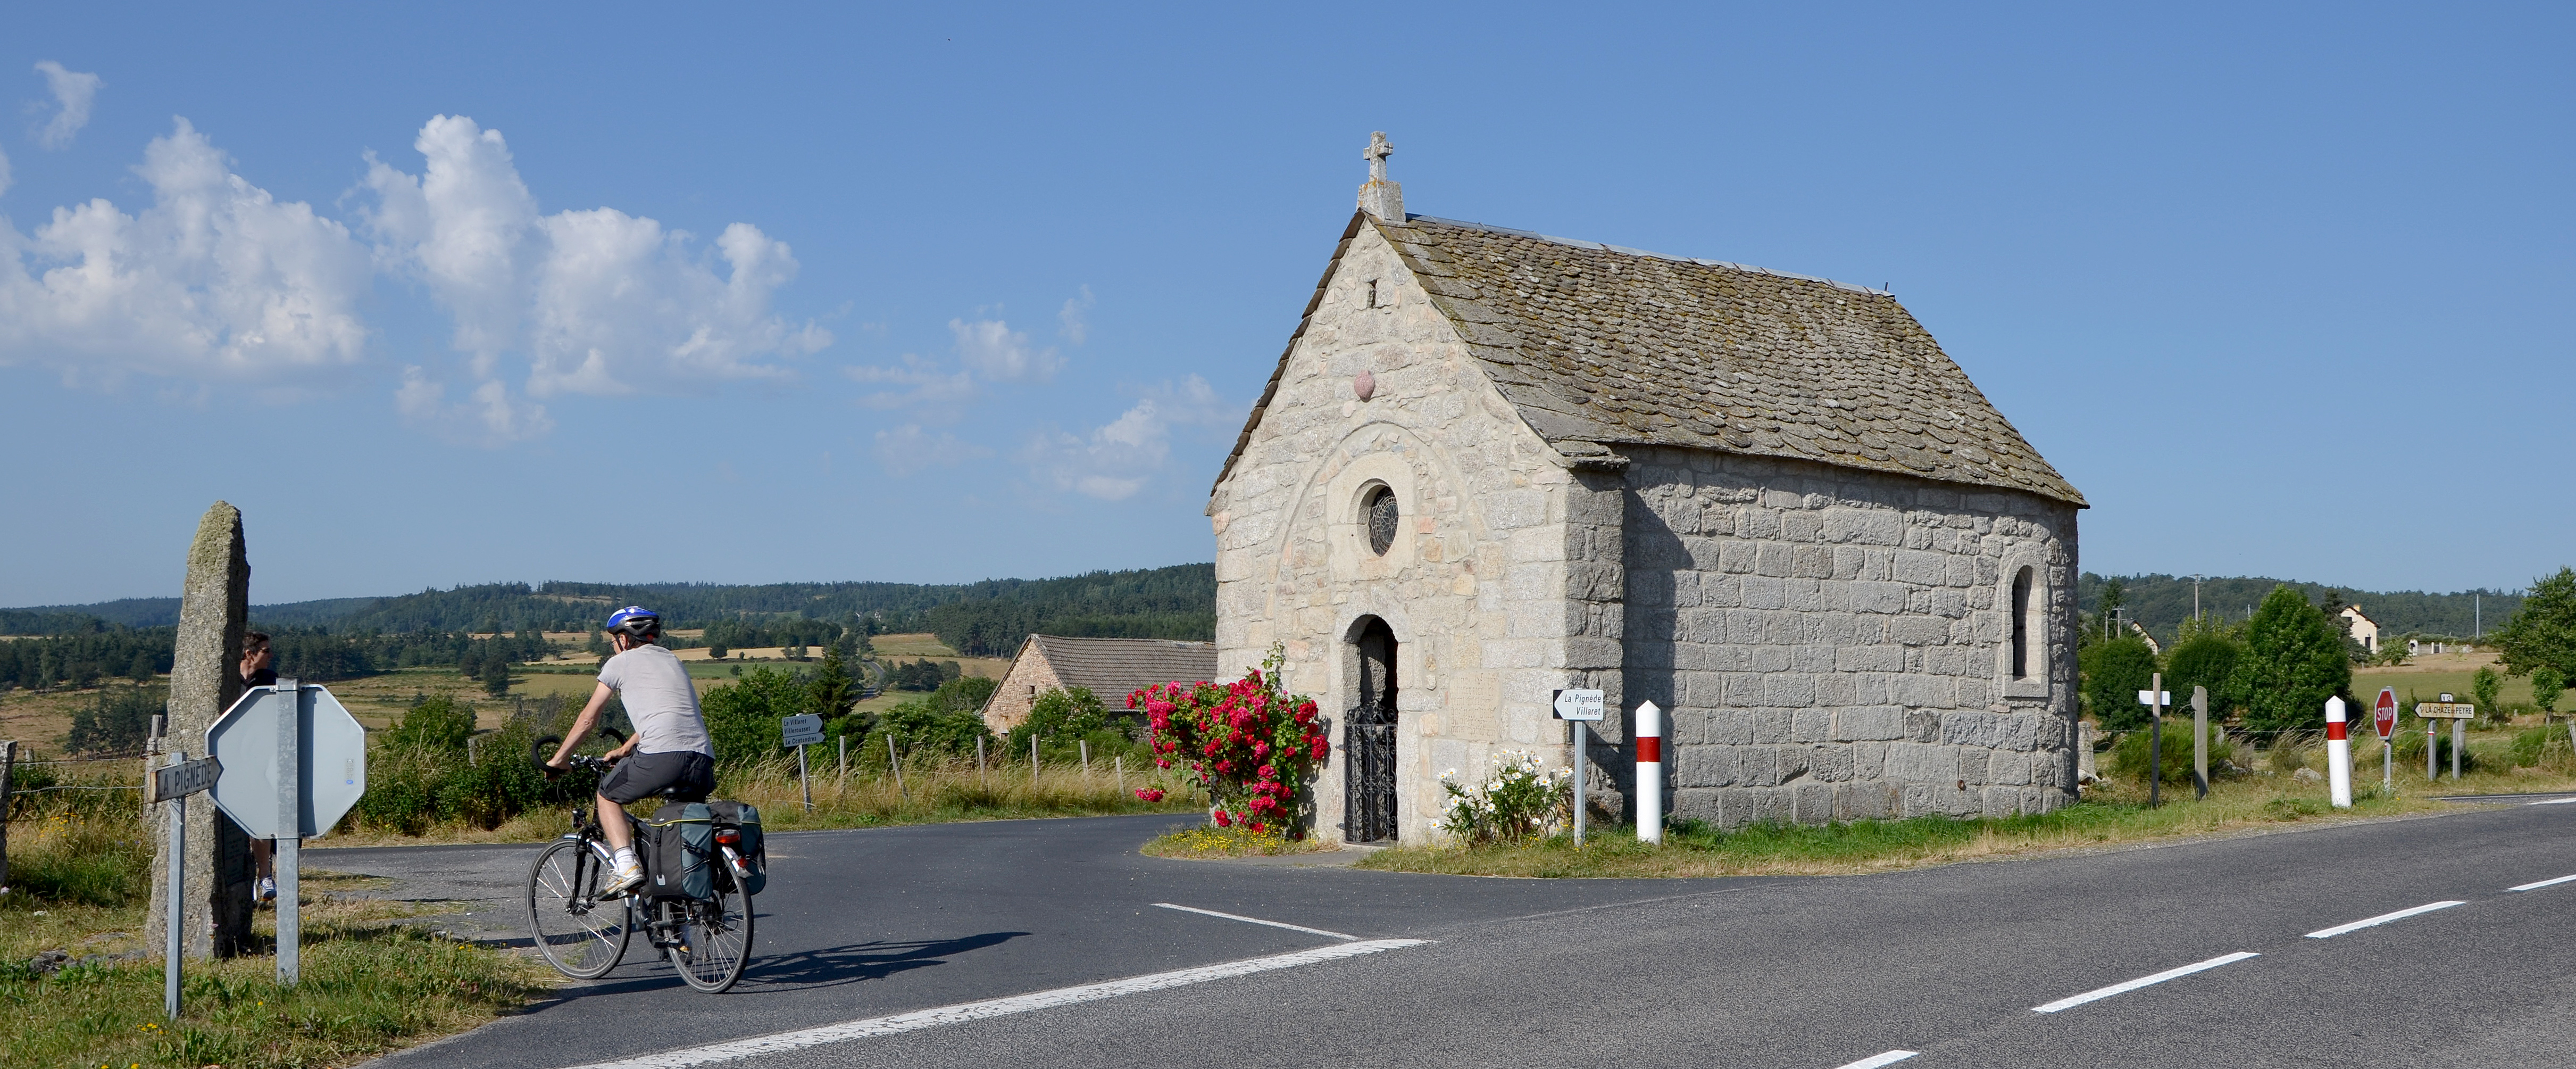 Chapelle de Bastide vers Lasbros DSC 0598